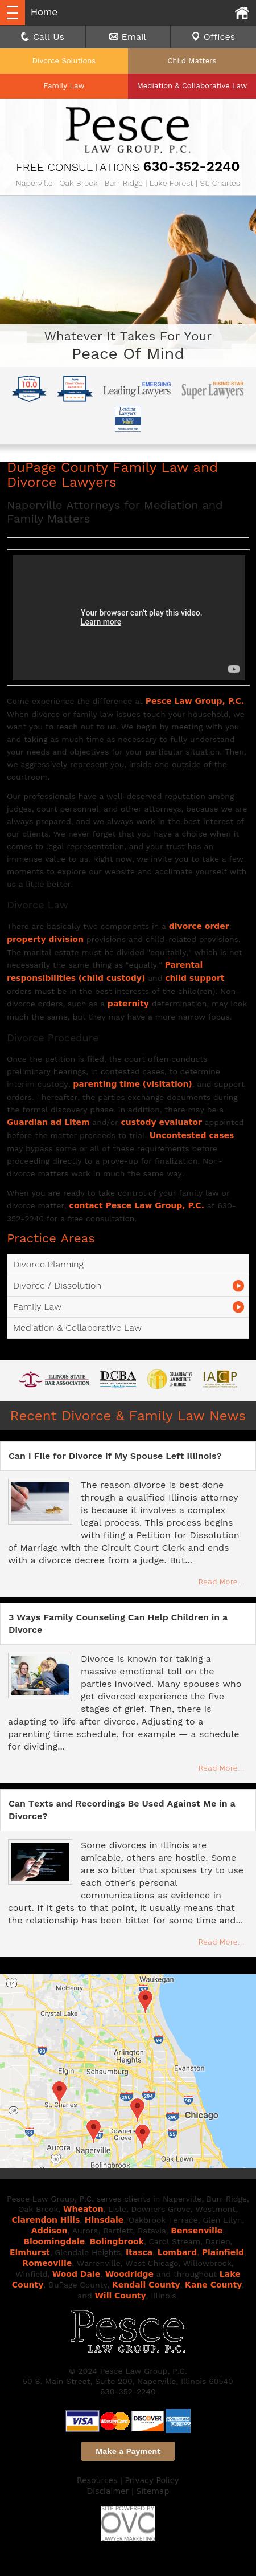 Pesce Law Group, P.C. - Naperville IL Lawyers